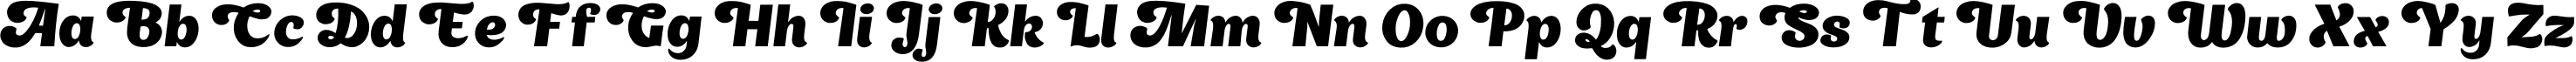 Пример написания английского алфавита шрифтом AppetiteNew